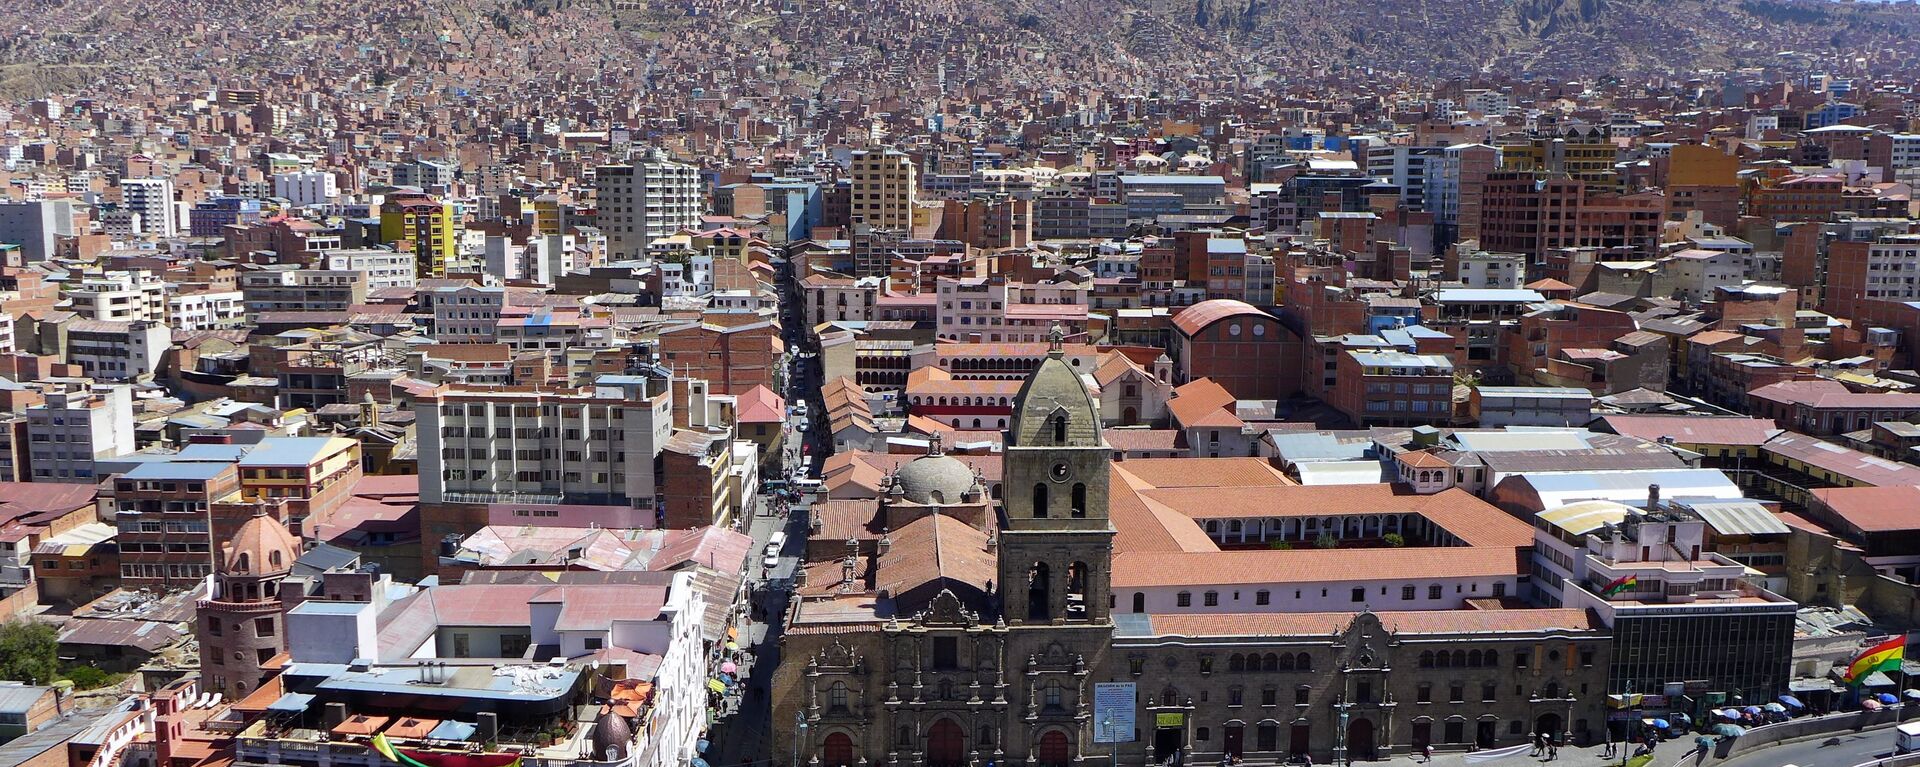 La Paz, la capital de Bolivia - Sputnik Mundo, 1920, 21.05.2021